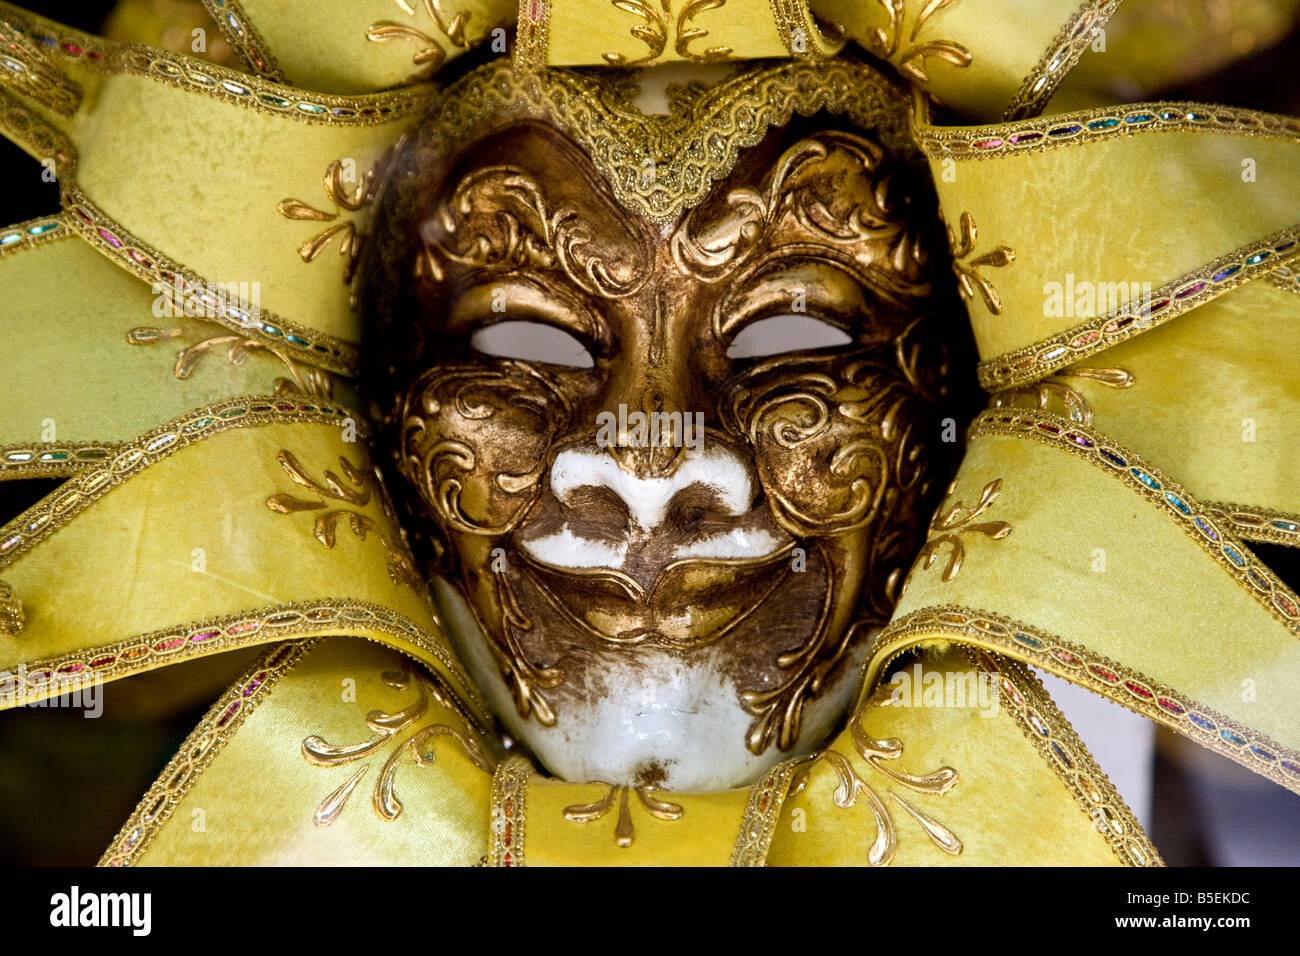 Venetian mask sun like in appearance with gold details Venice Veneto Italy Europe EU Stock Photo